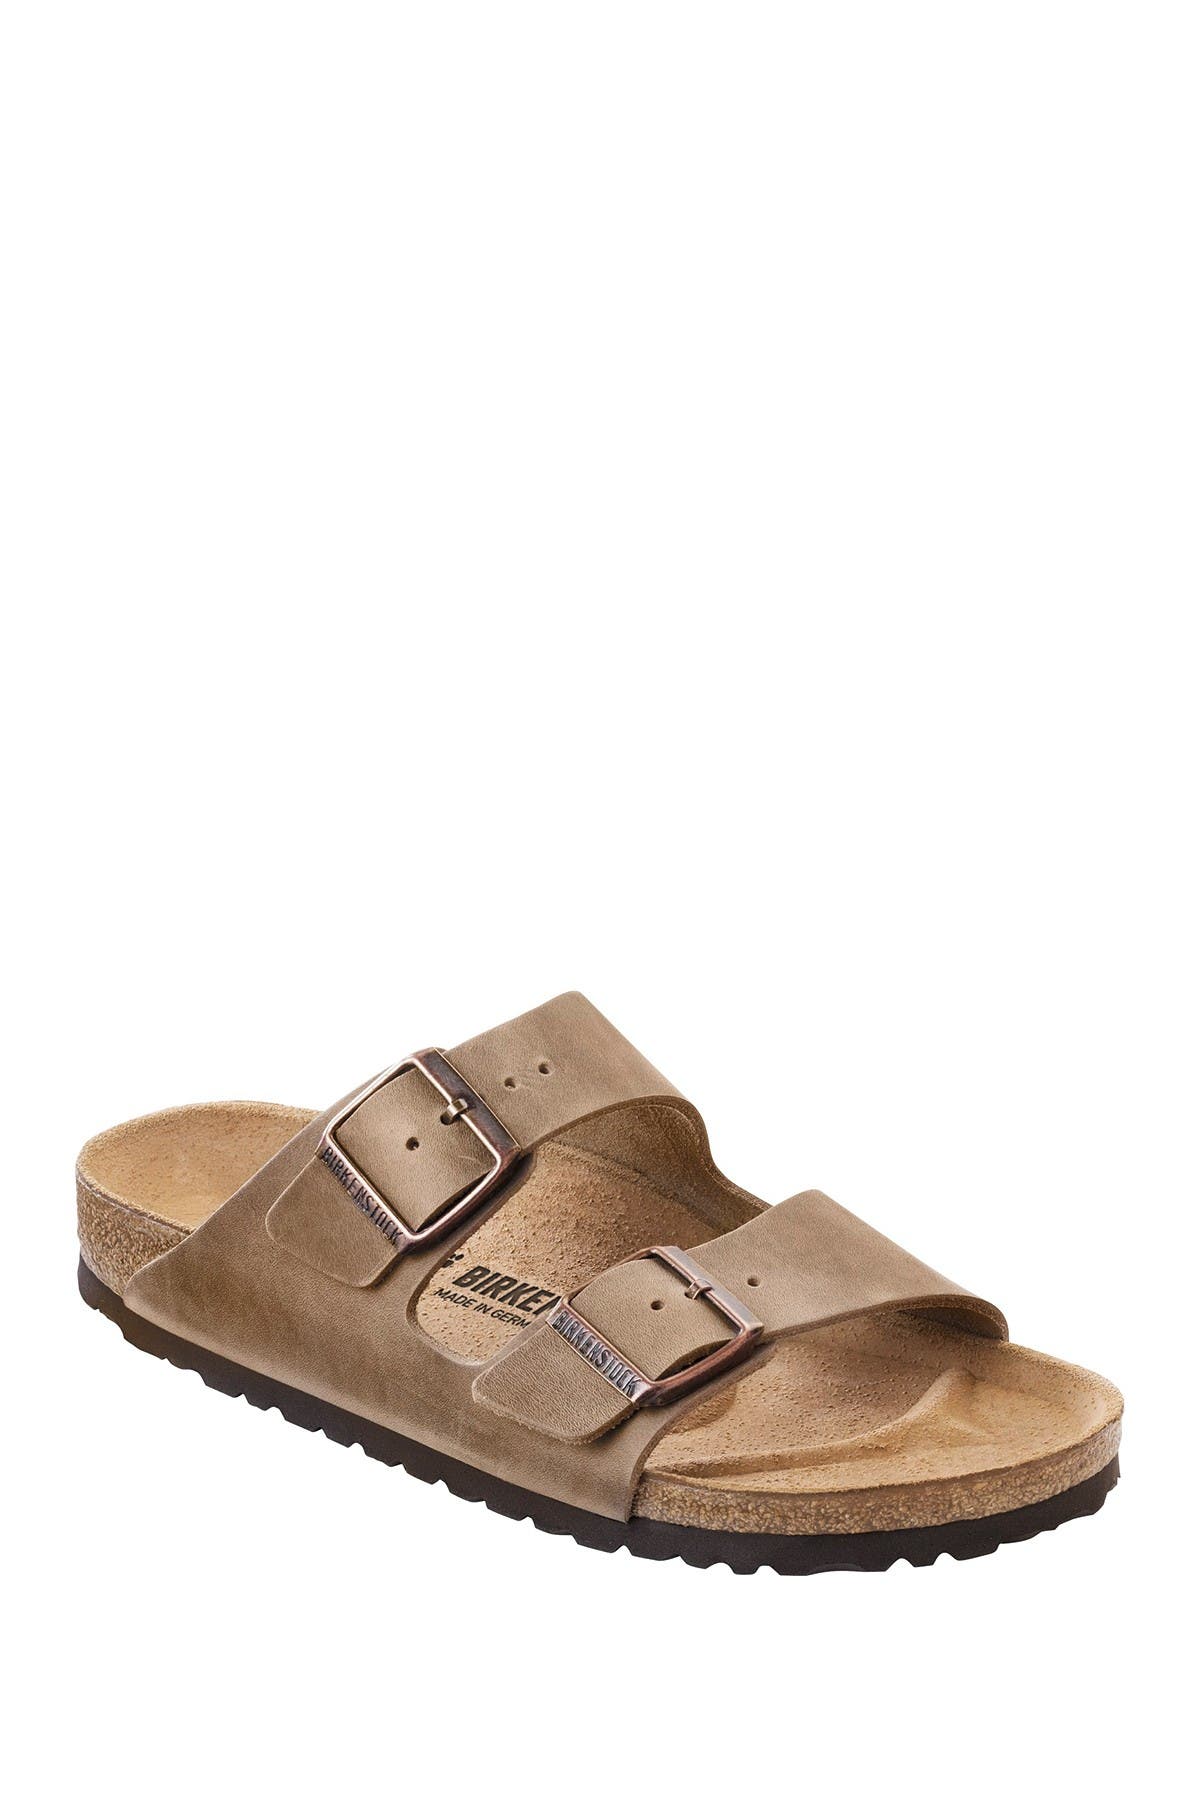 birkenstock arizona leather sandals